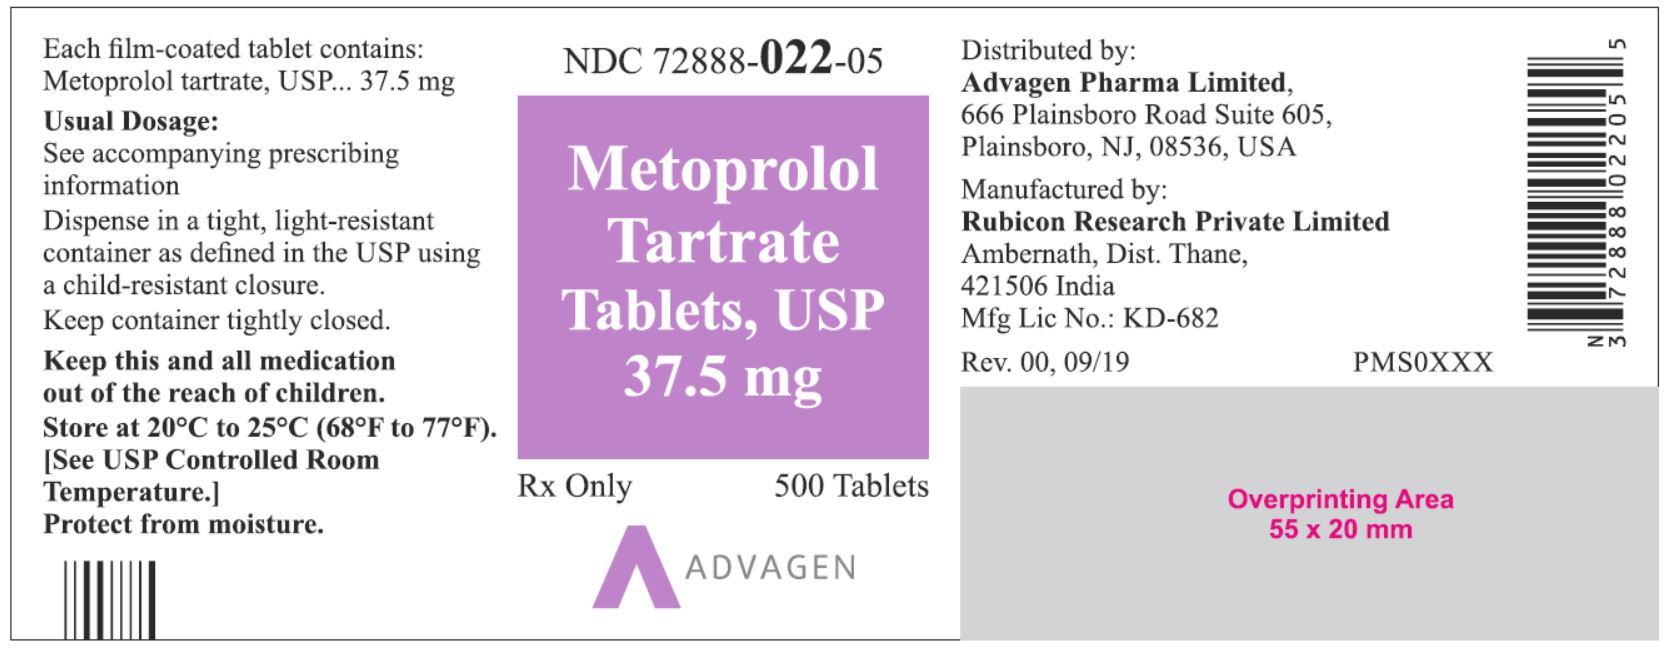 NDC 72888-022-05 - Metoprolol Tartrate Tablets, USP 37.5 mg - 500 Tablets